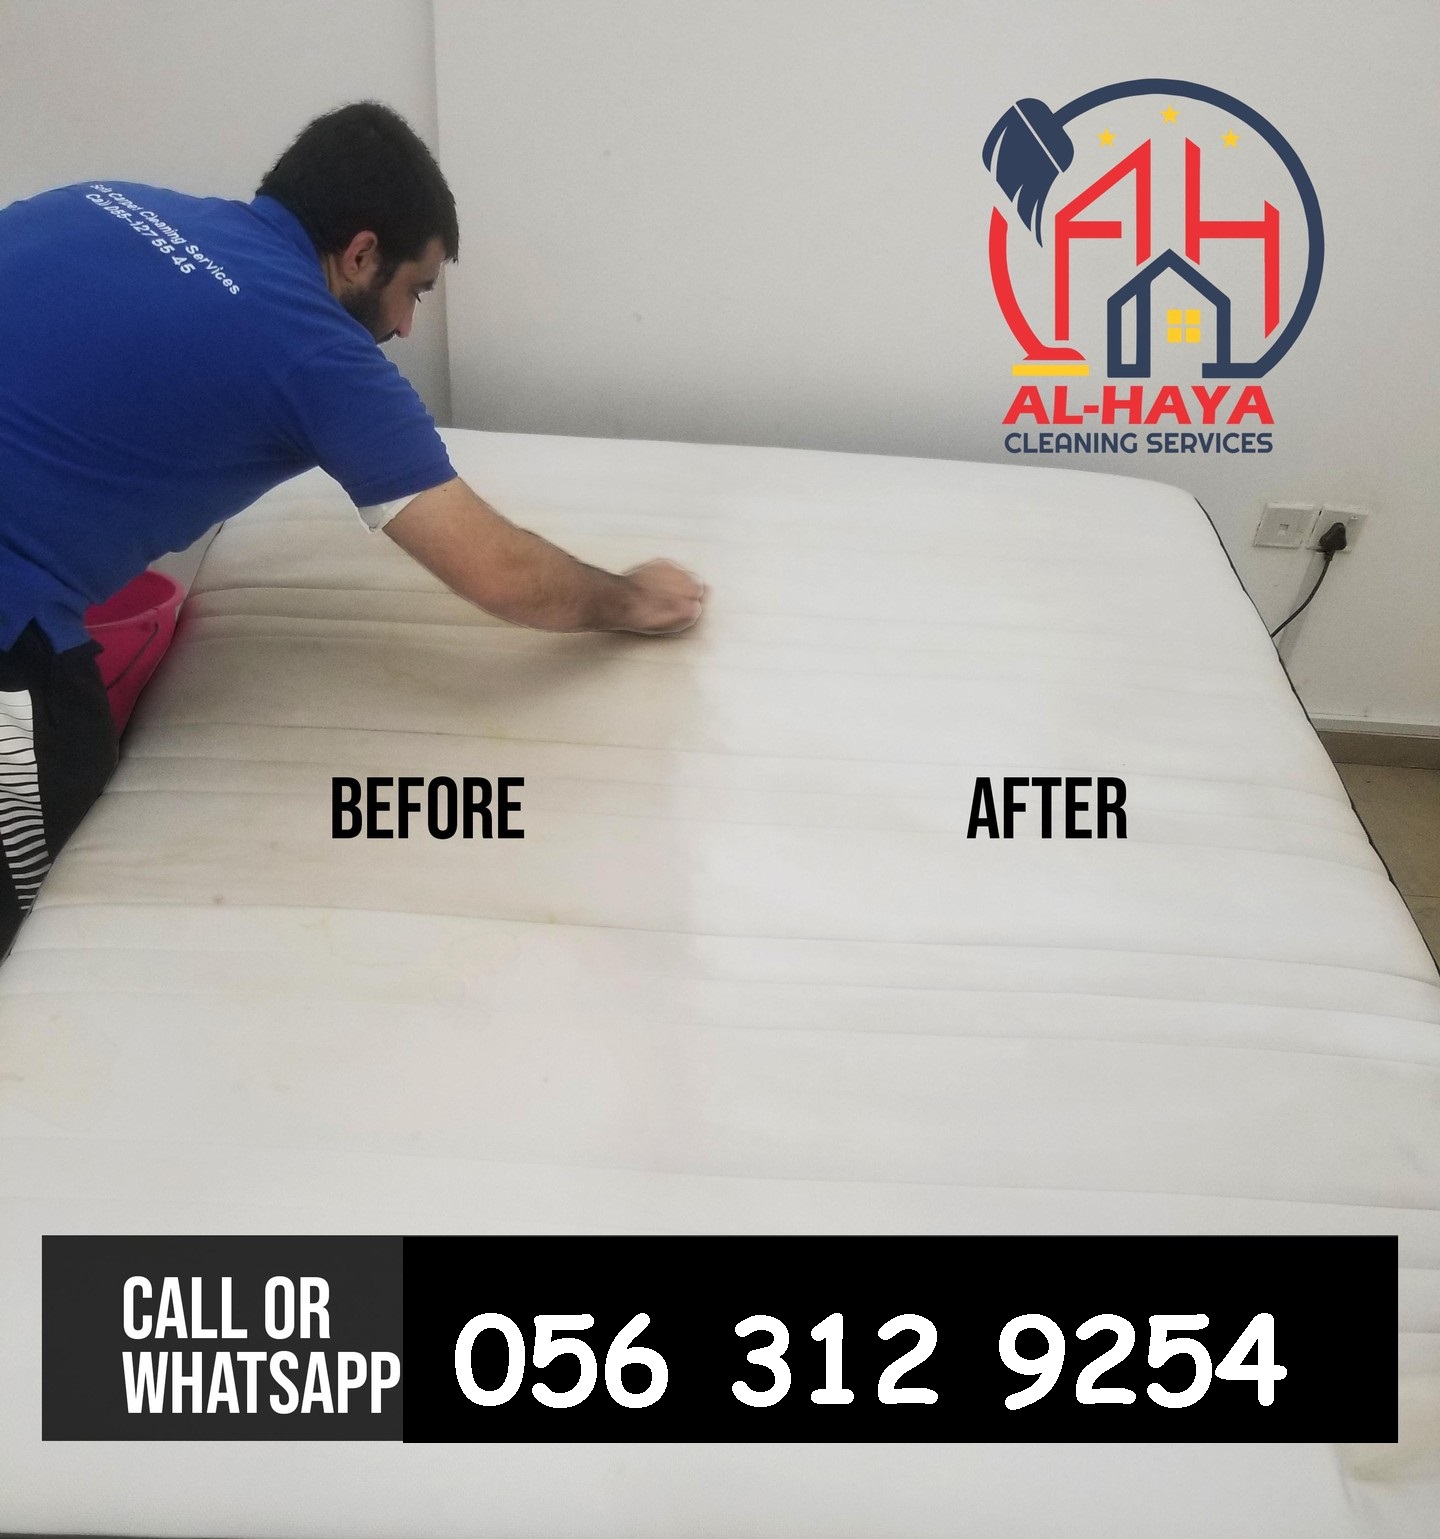 Bed Mattress Cleaning Service Dubai 0563129254 Carpet Cleaners Dubai